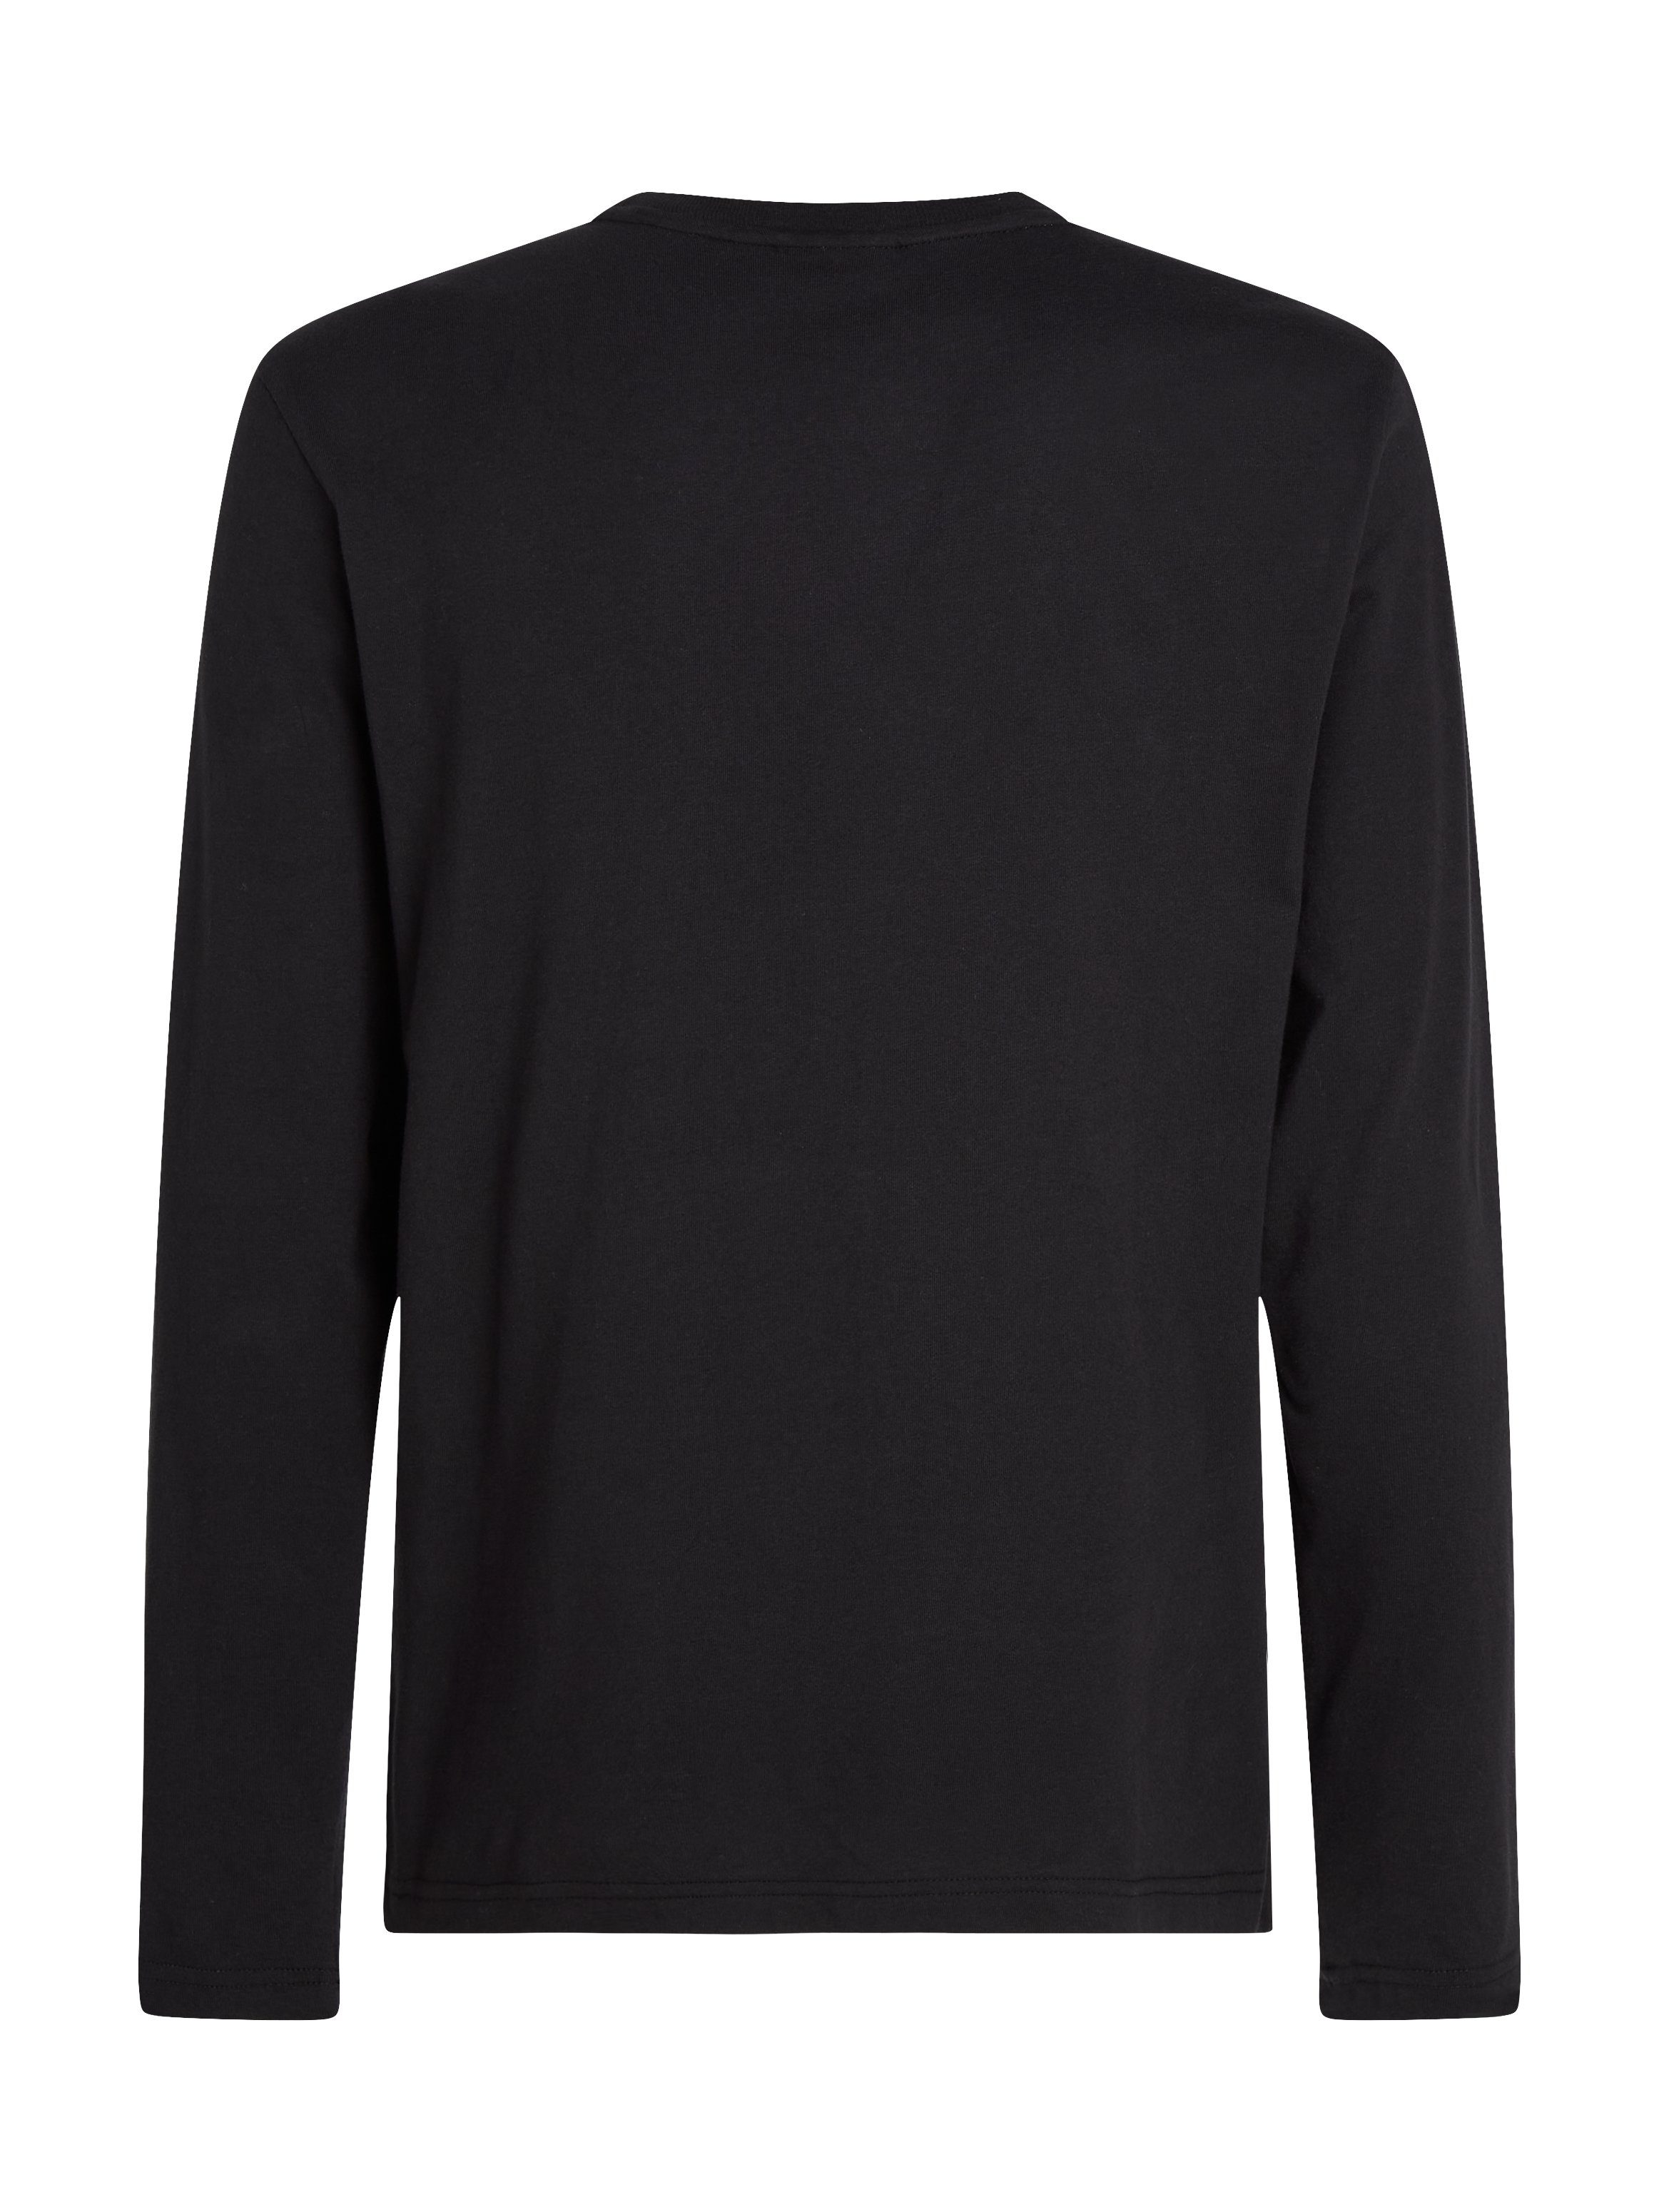 LS Calvin Klein LOGO THROUGH Black T-SHIRT Ck CUT Langarmshirt